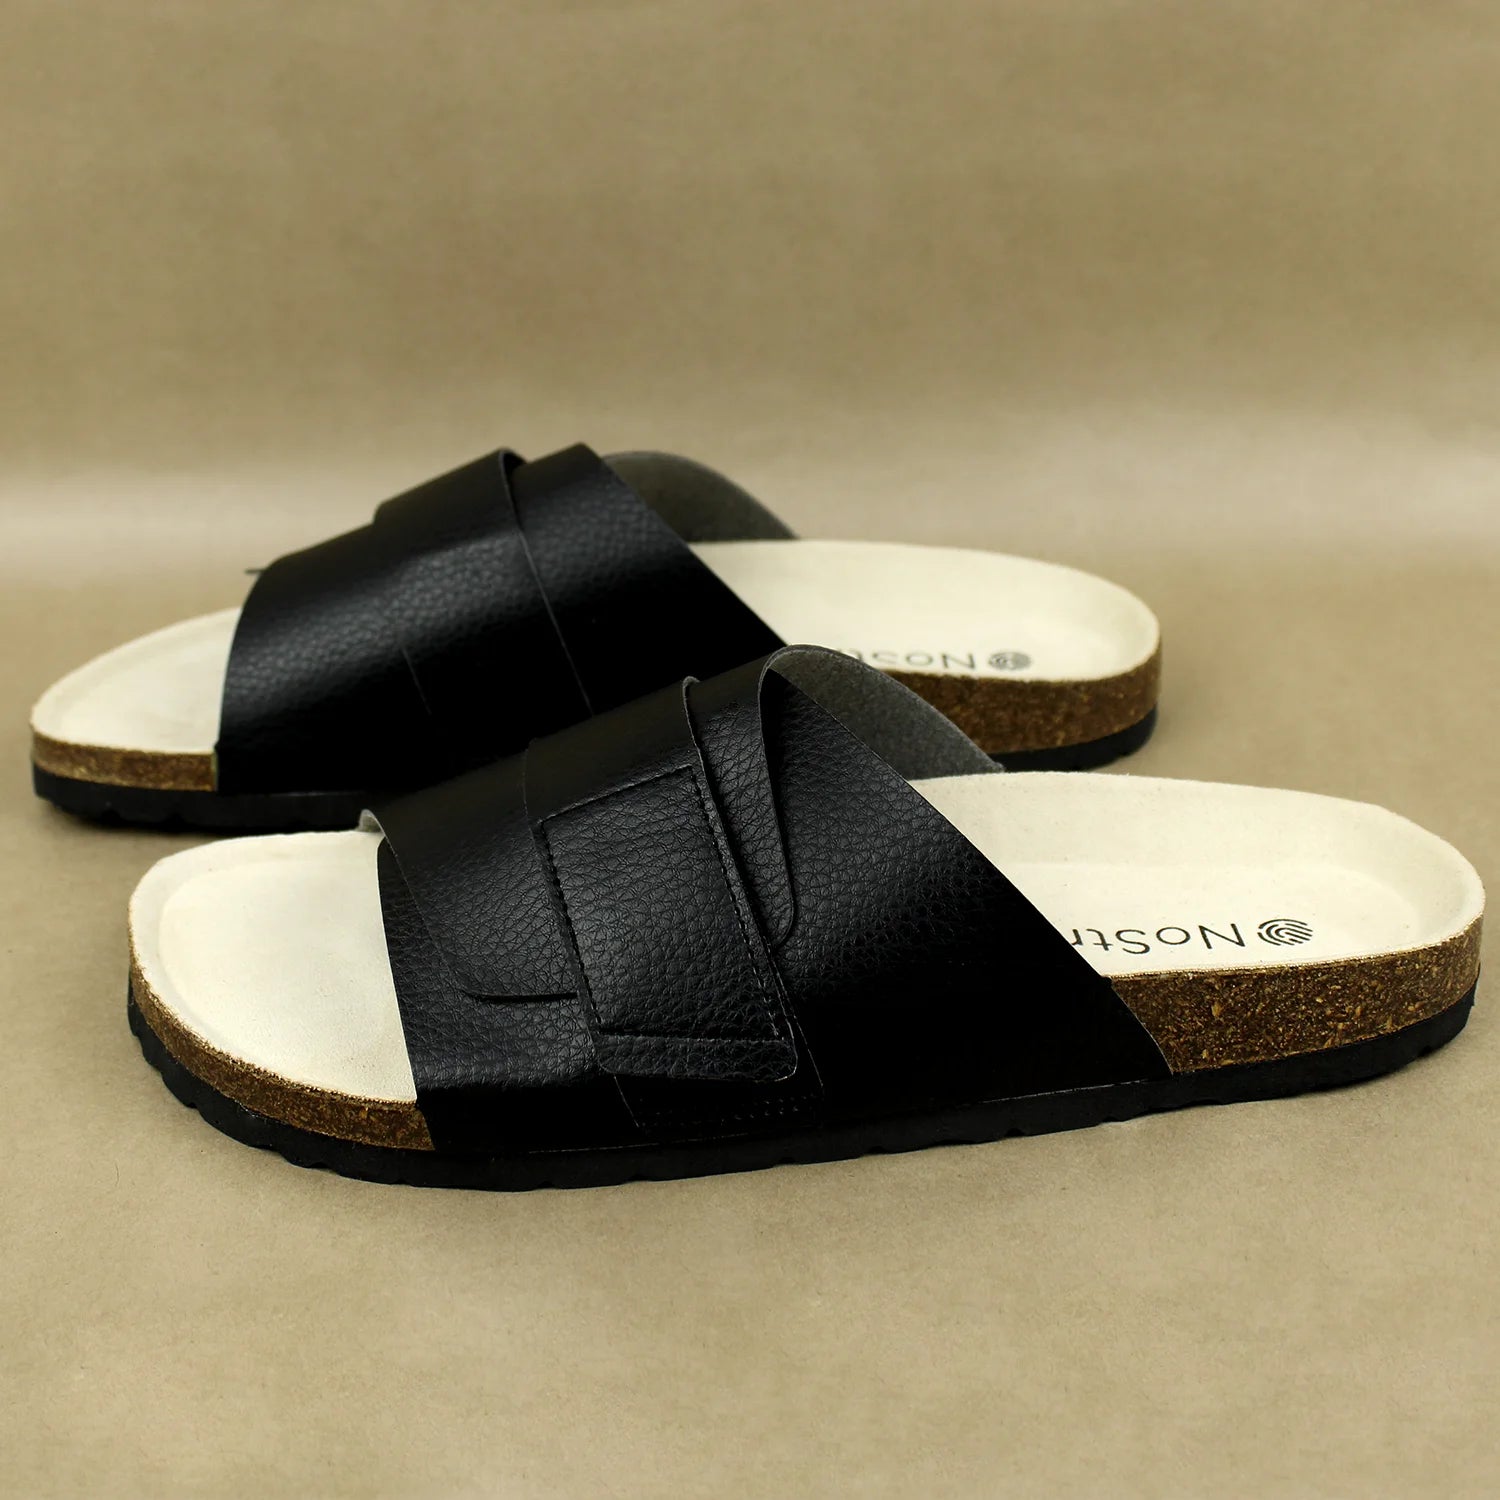 Elegant black cork sandals with adjustable straps, suitable for all-day comfort